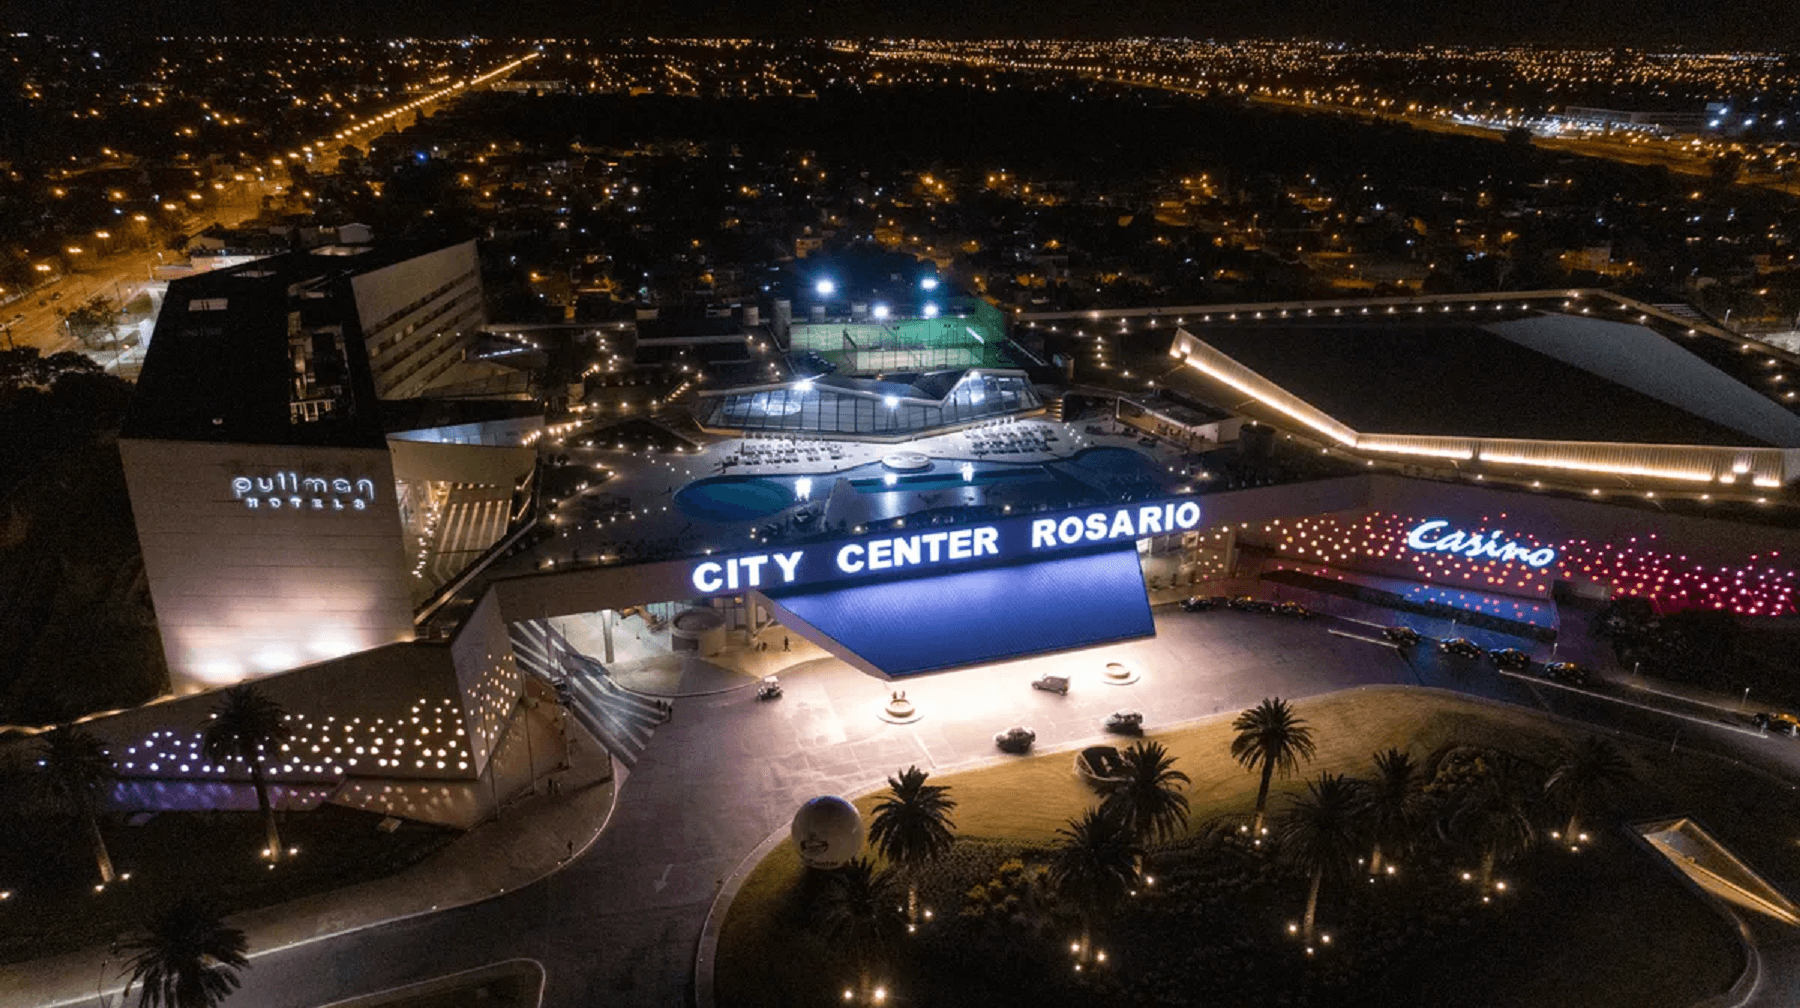 City-Center-Rosario-1